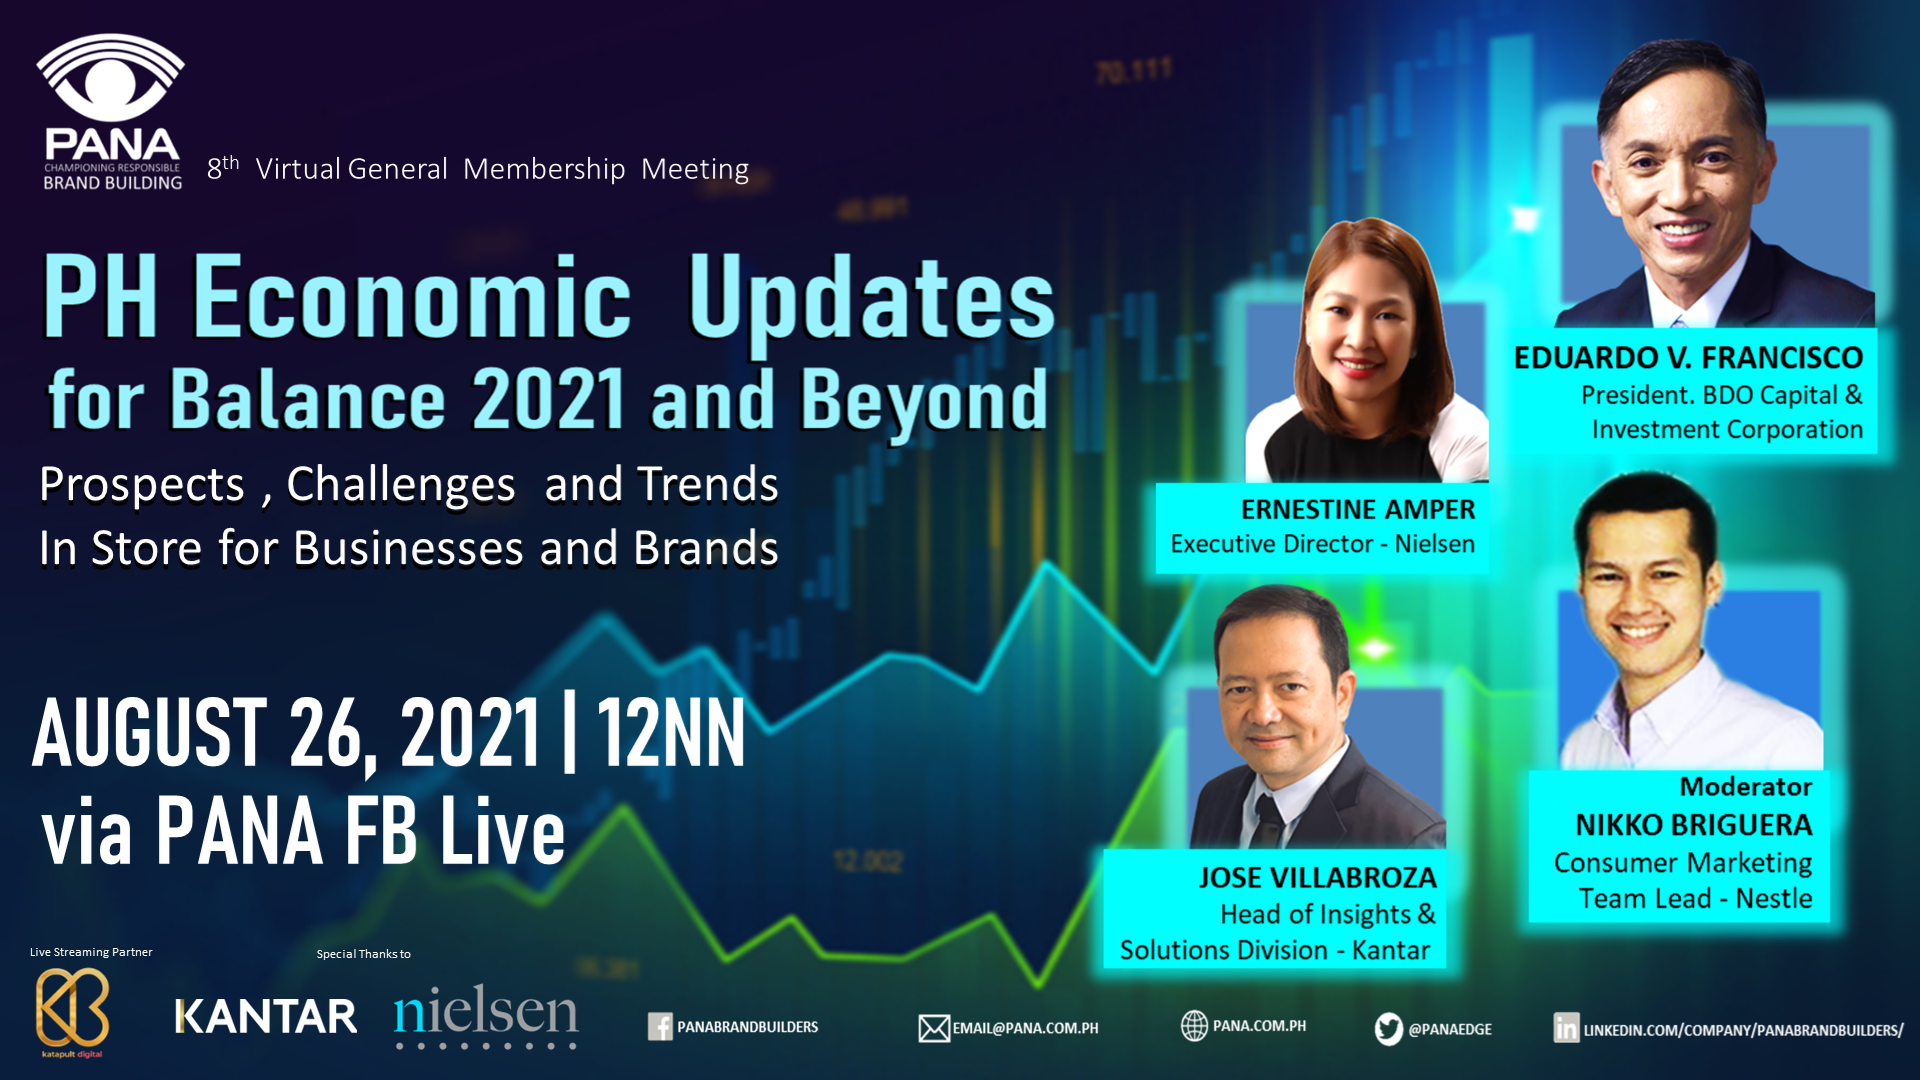 AUGUST GMM: PH Economic Updates for Balance 2021 Beyond